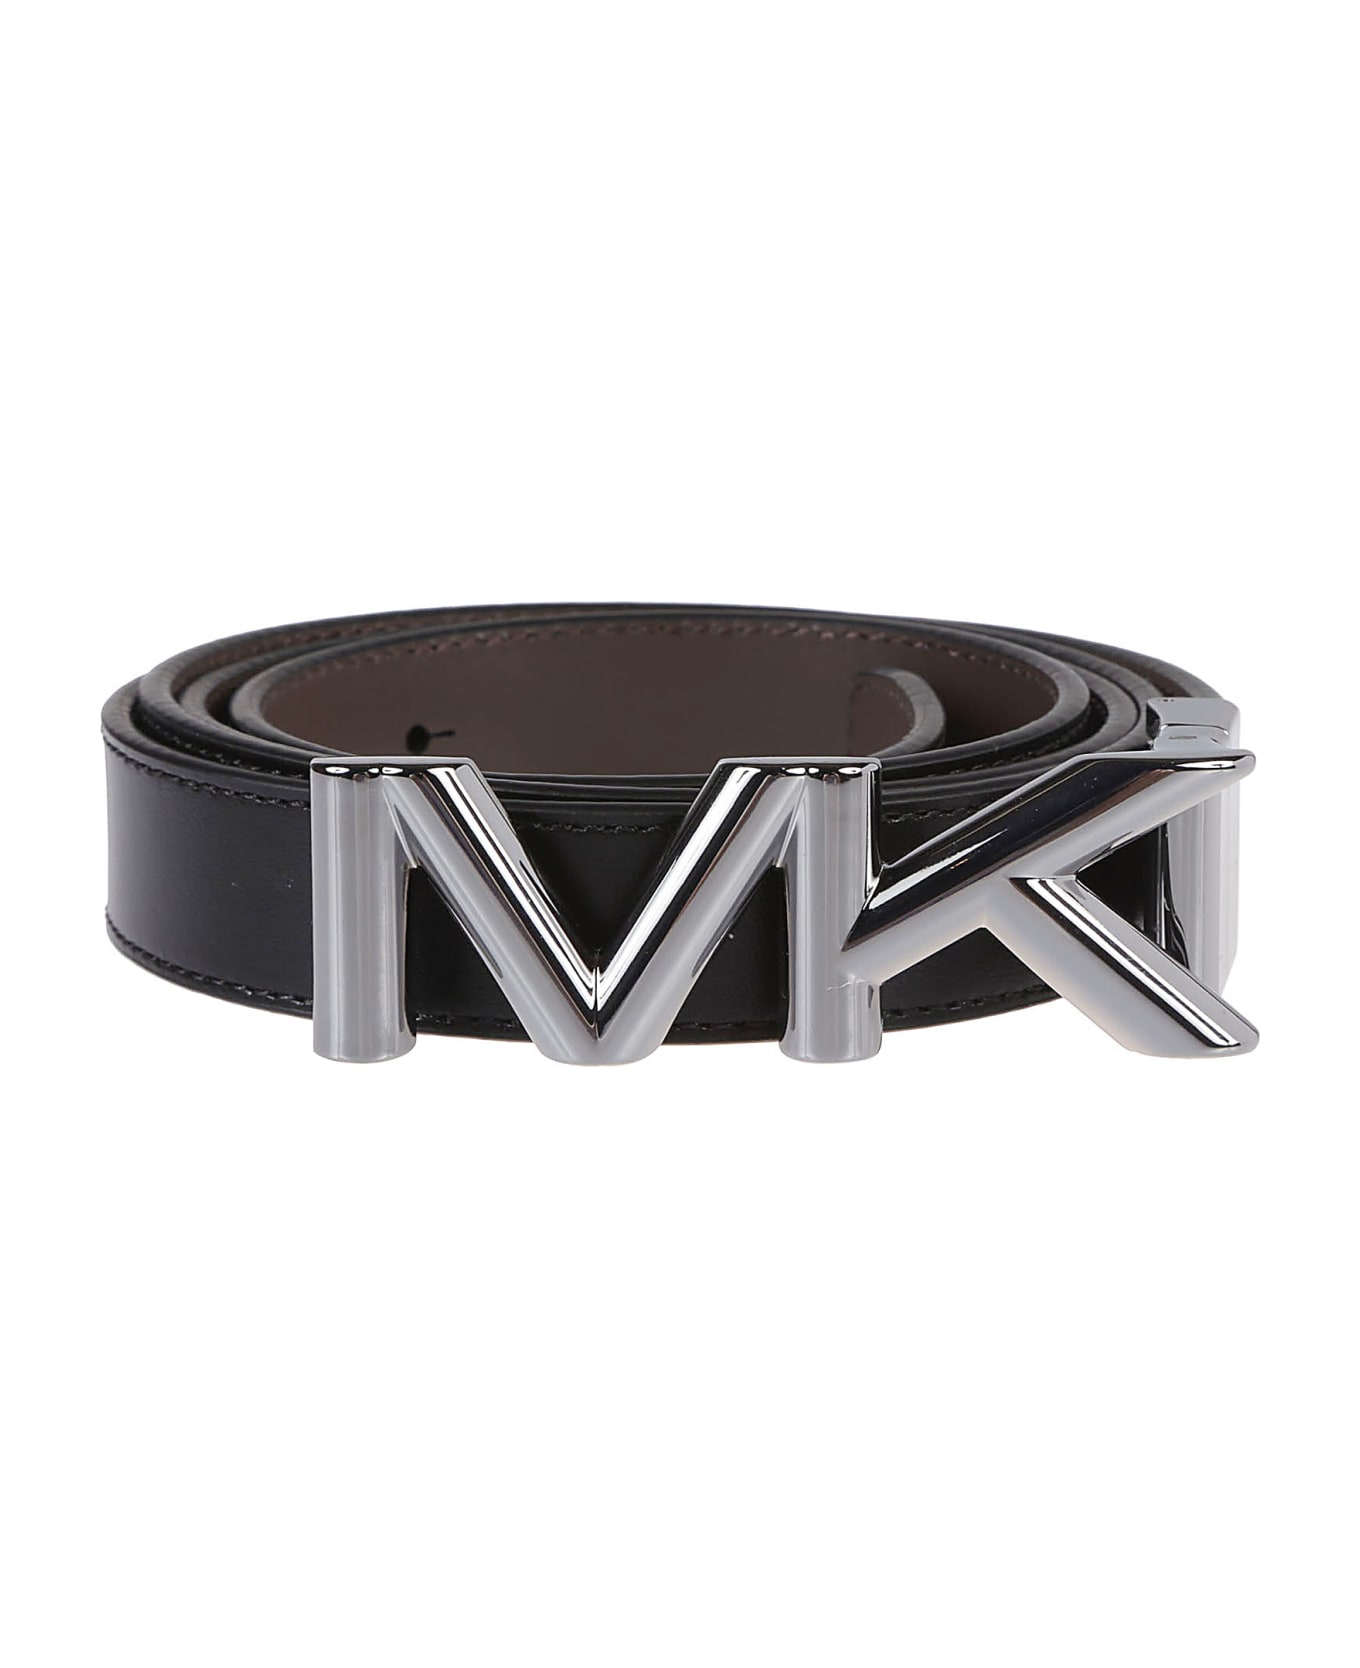 Michael Kors Reversible Belt - Black